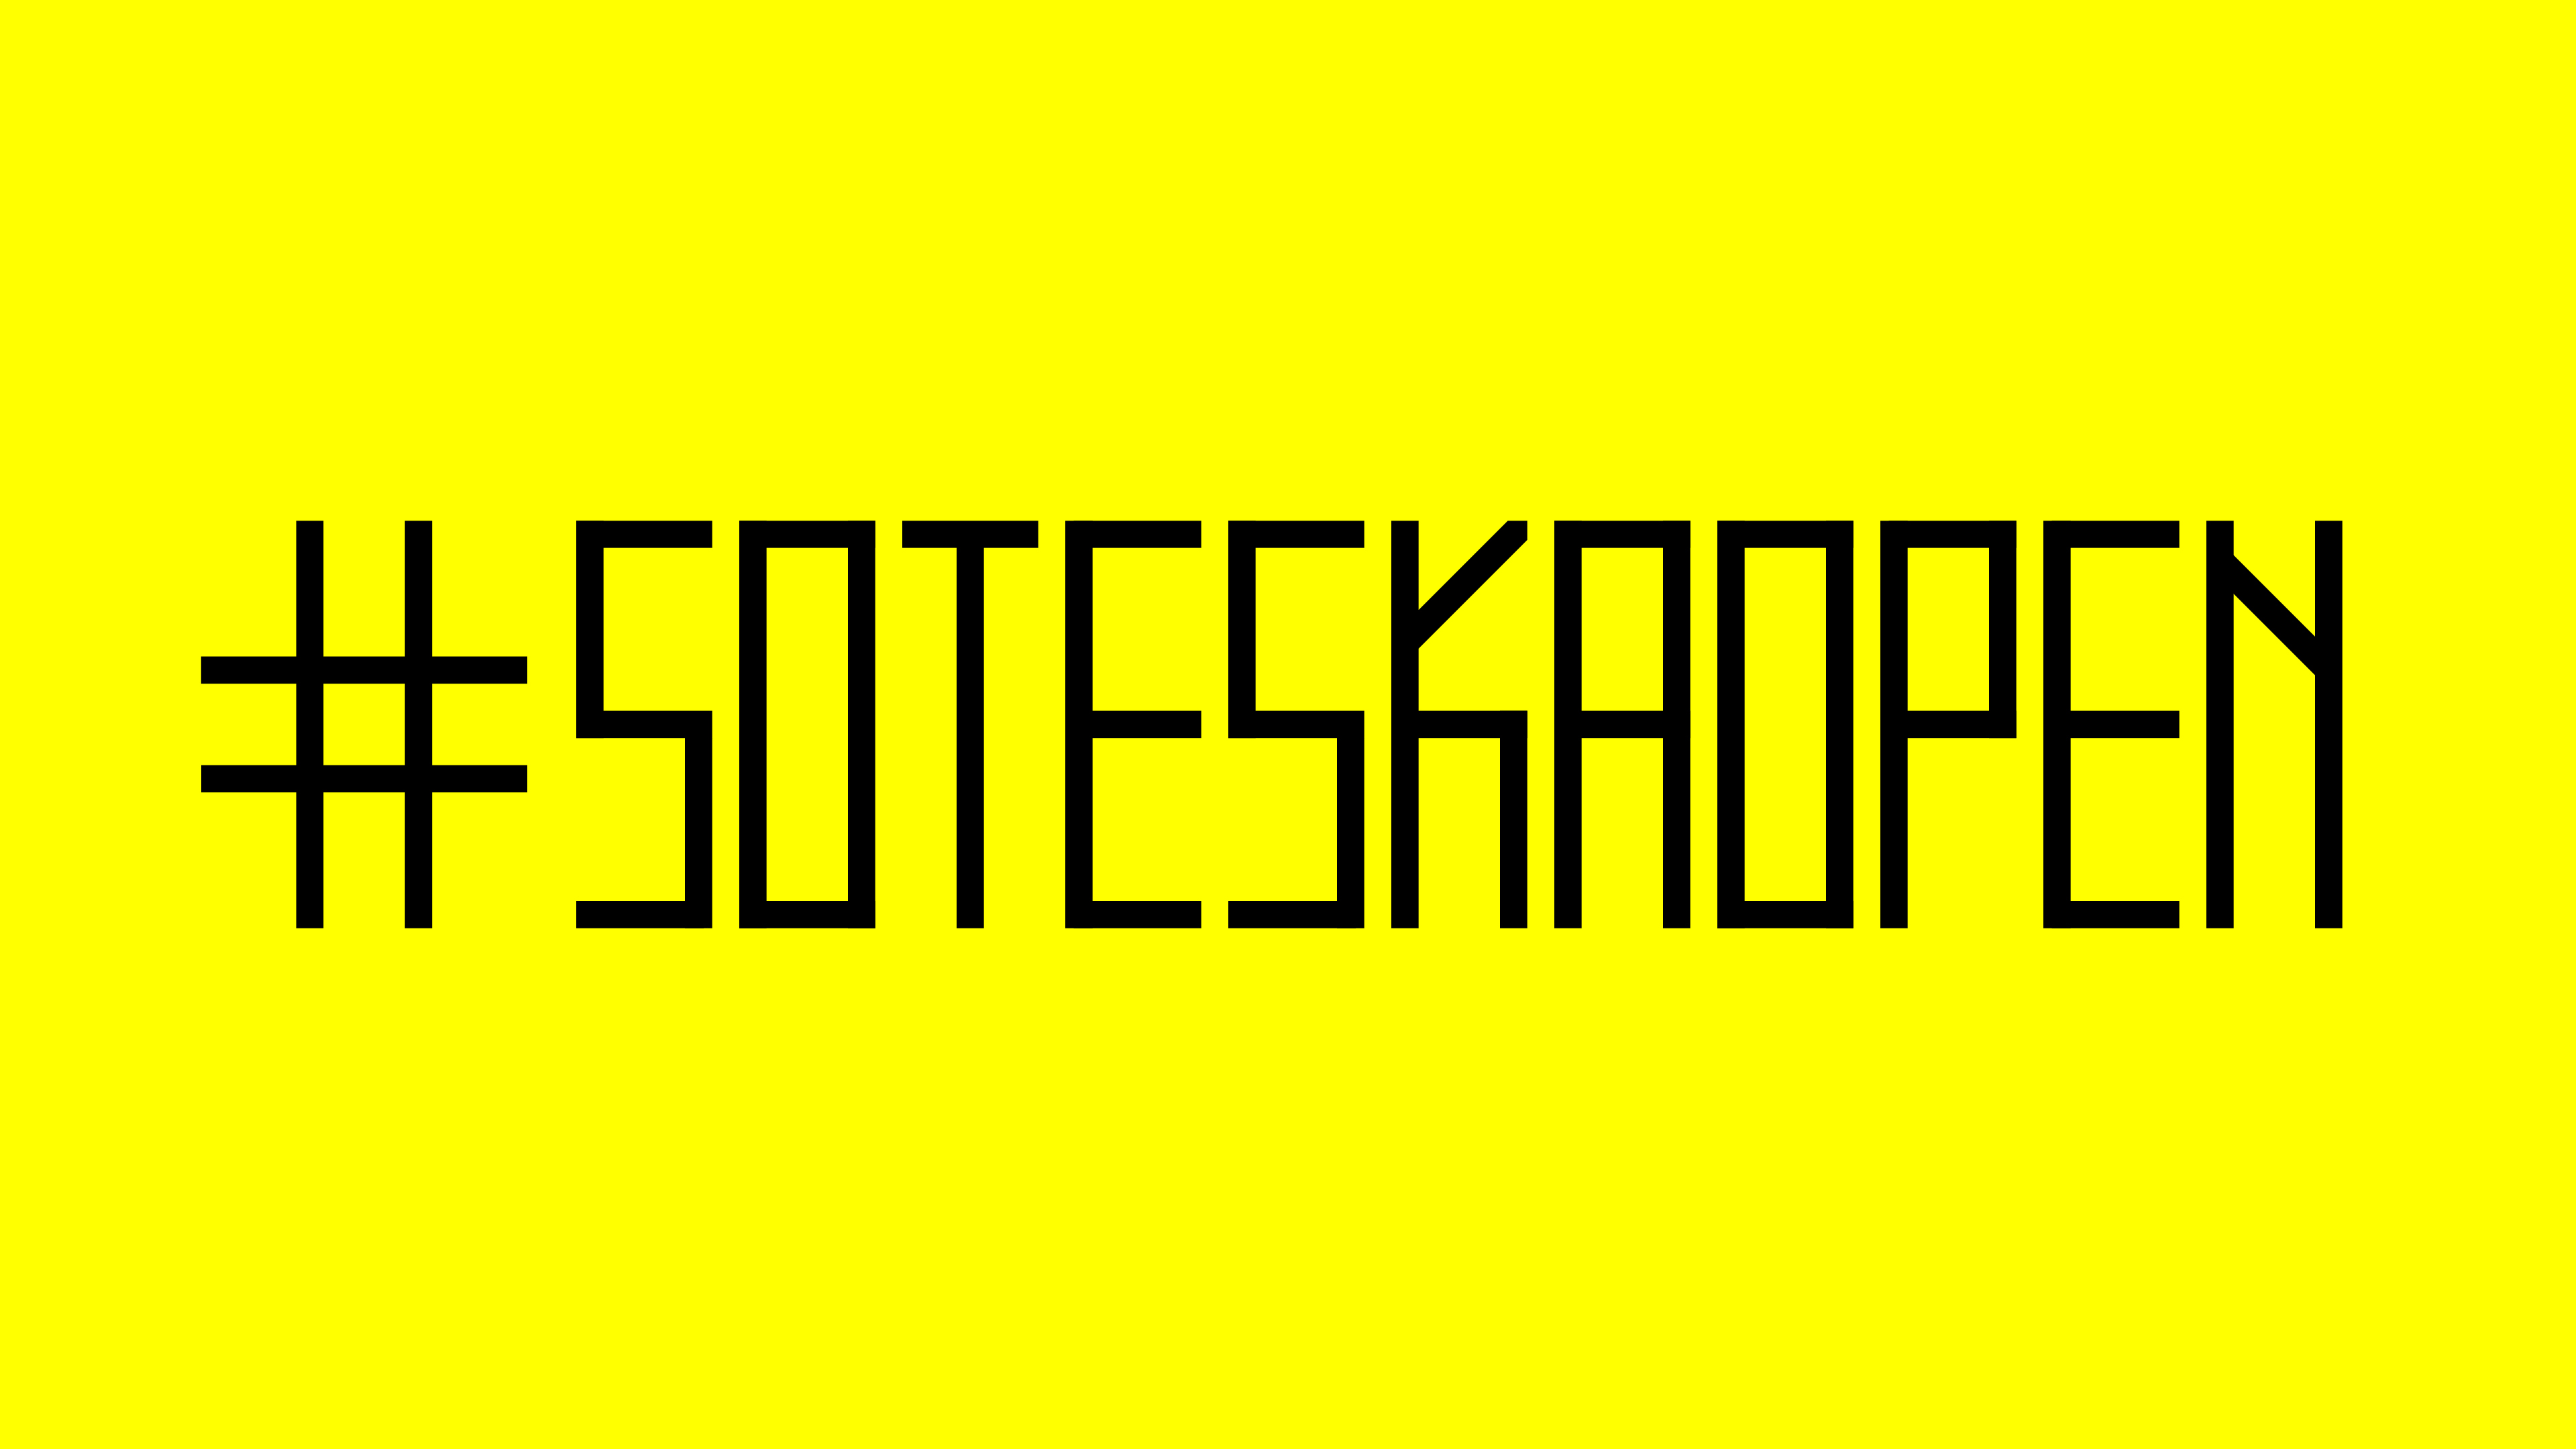 SOTESKA_FB cover 1920x1080_OK.jpg